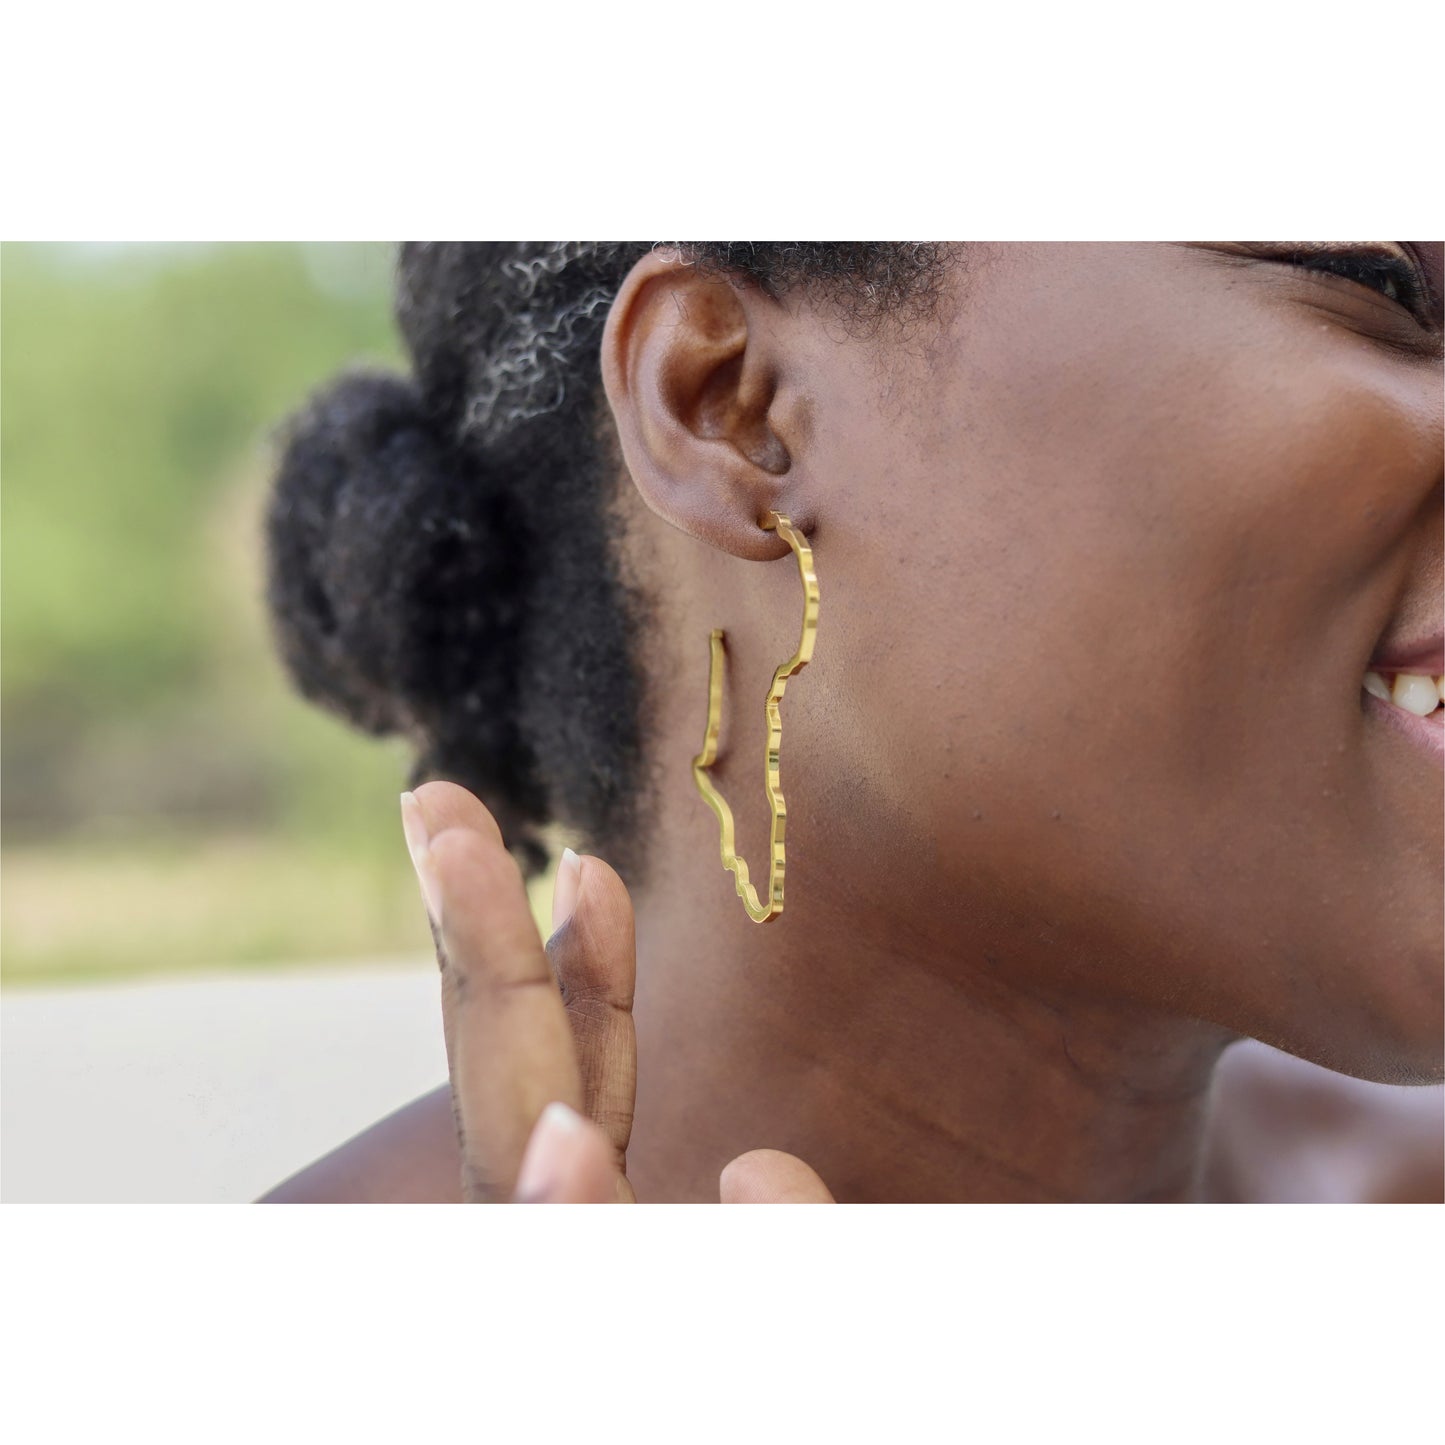 Afrique Gold Earrings